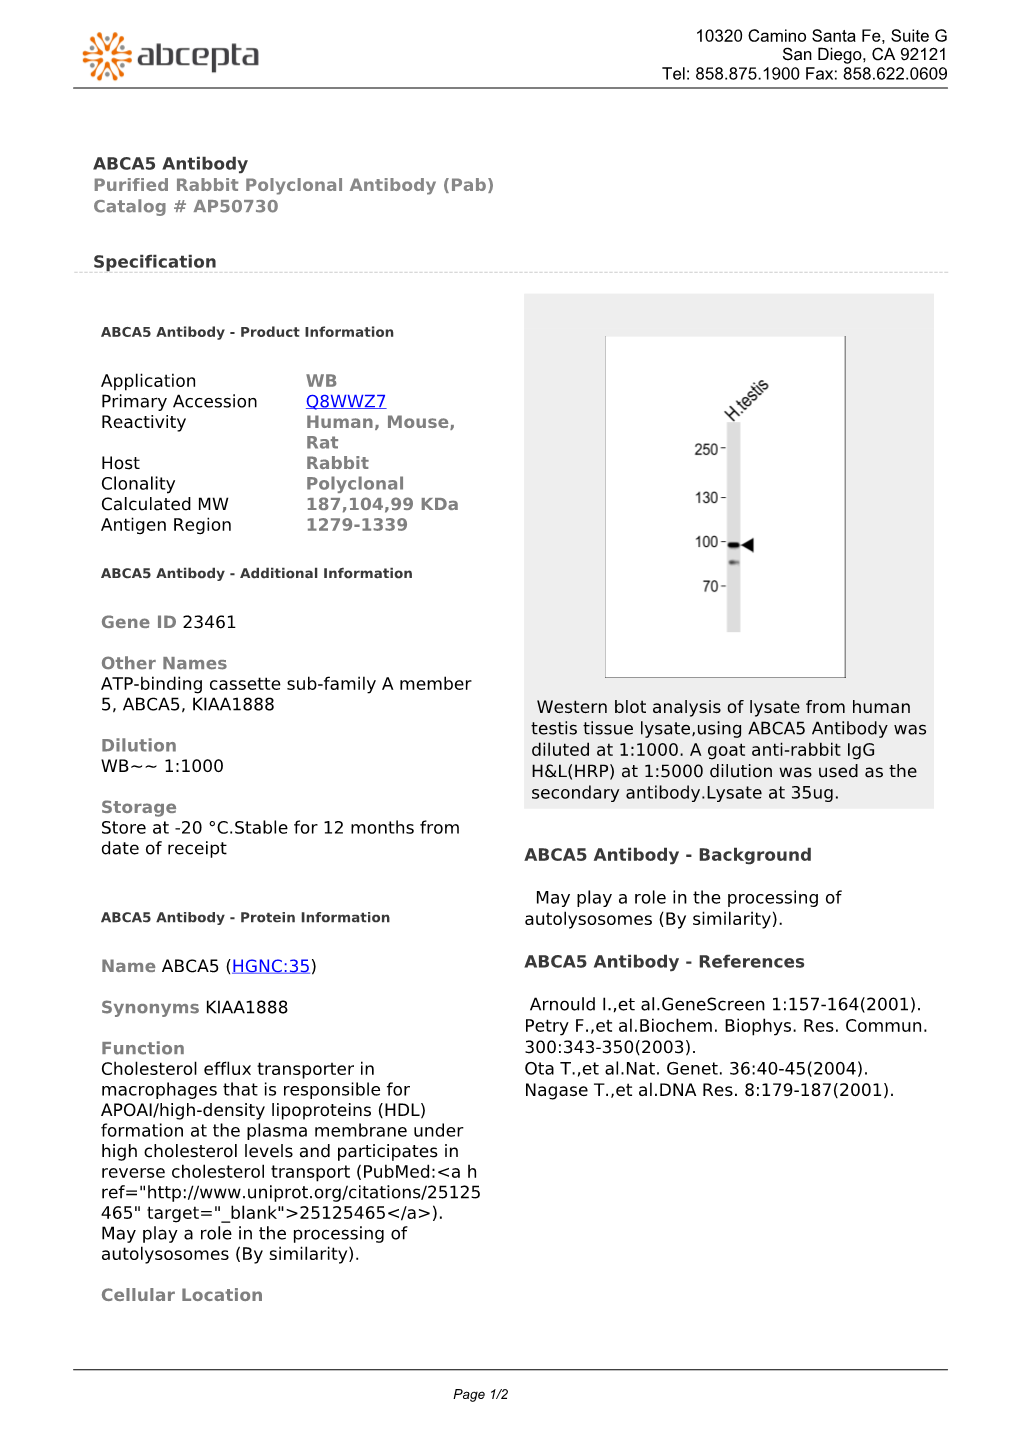 ABCA5 Antibody Purified Rabbit Polyclonal Antibody (Pab) Catalog # AP50730